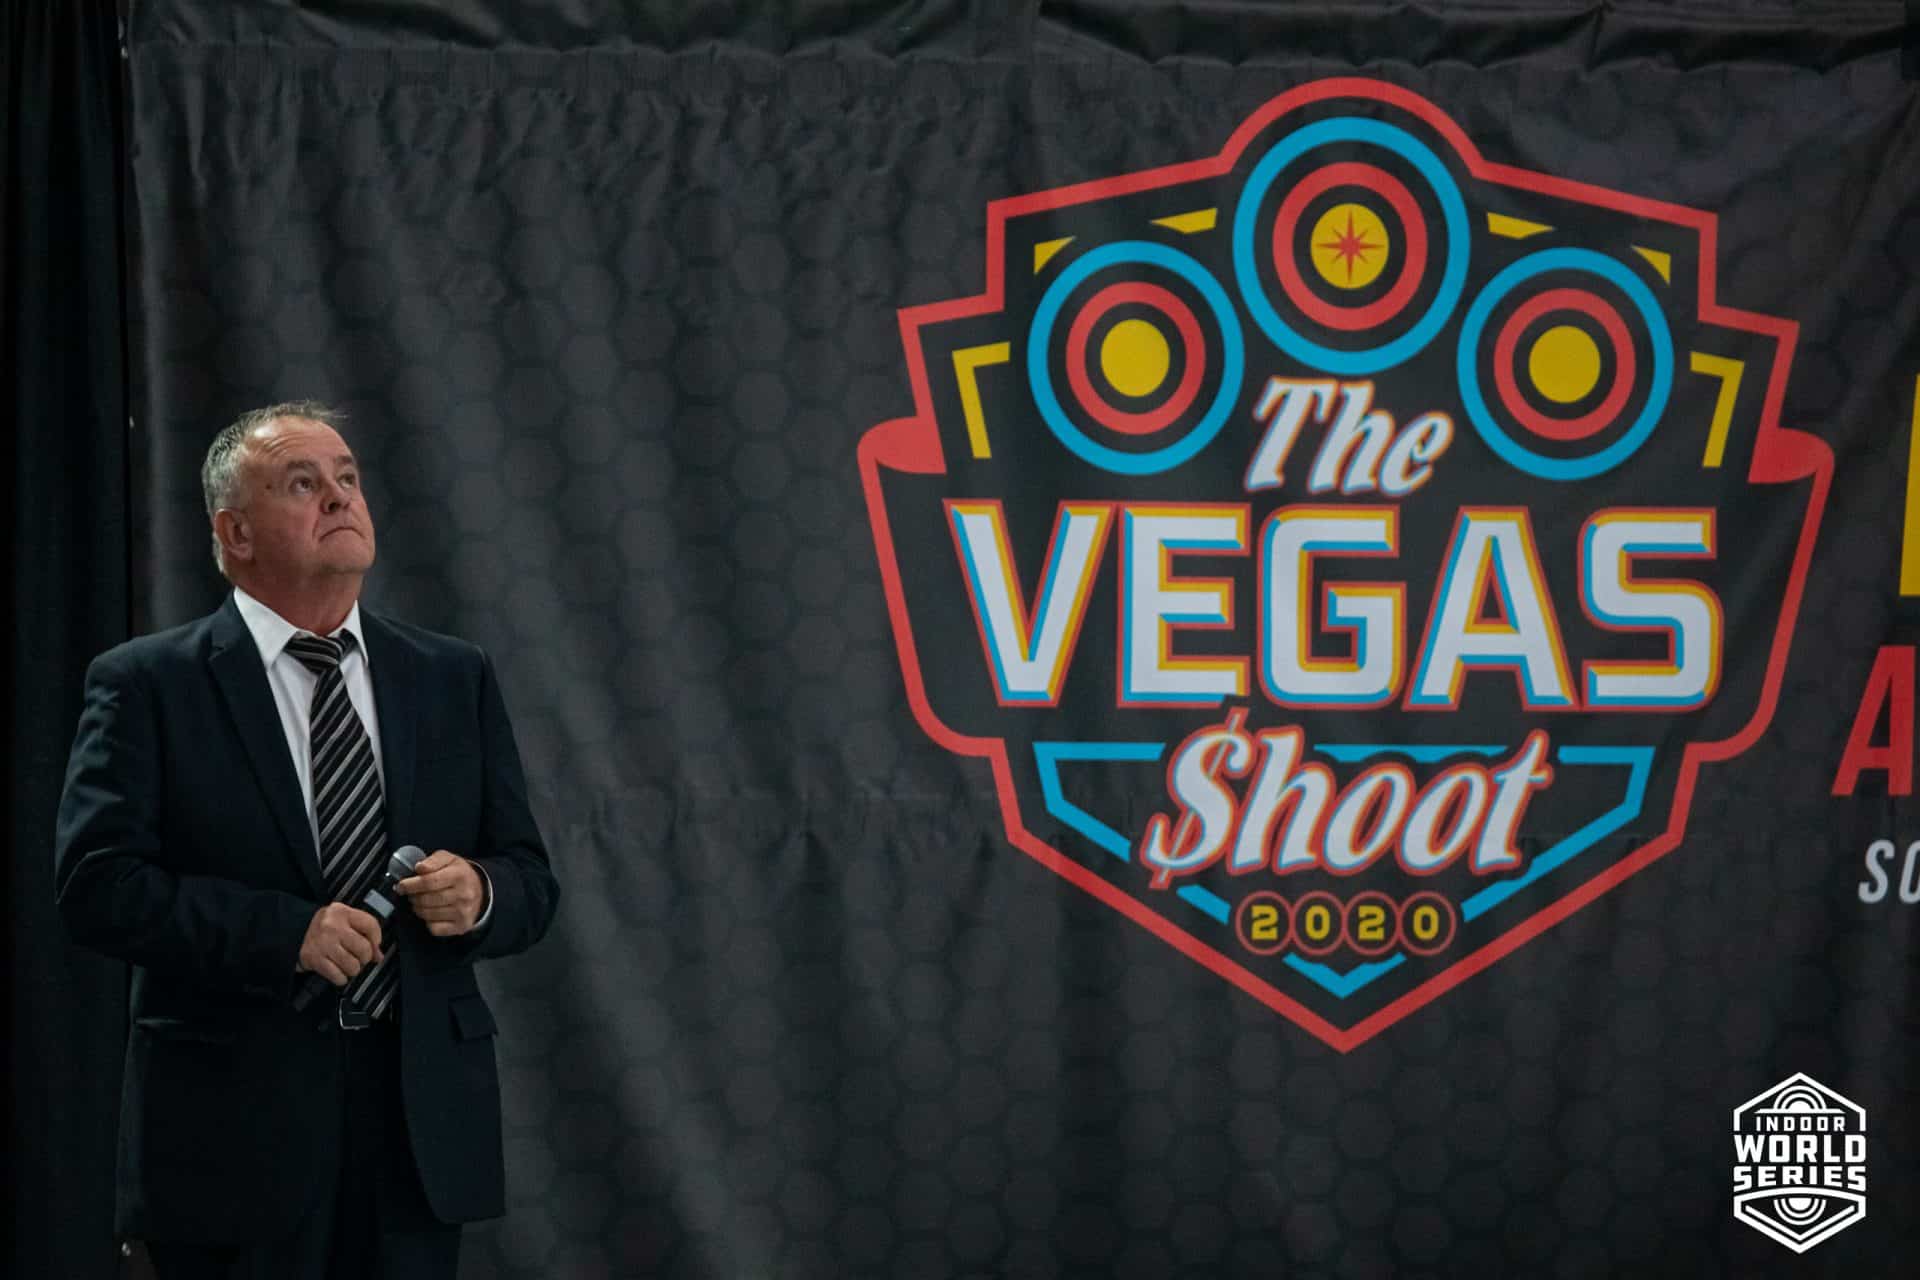 The Vegas Shoot - Day Three